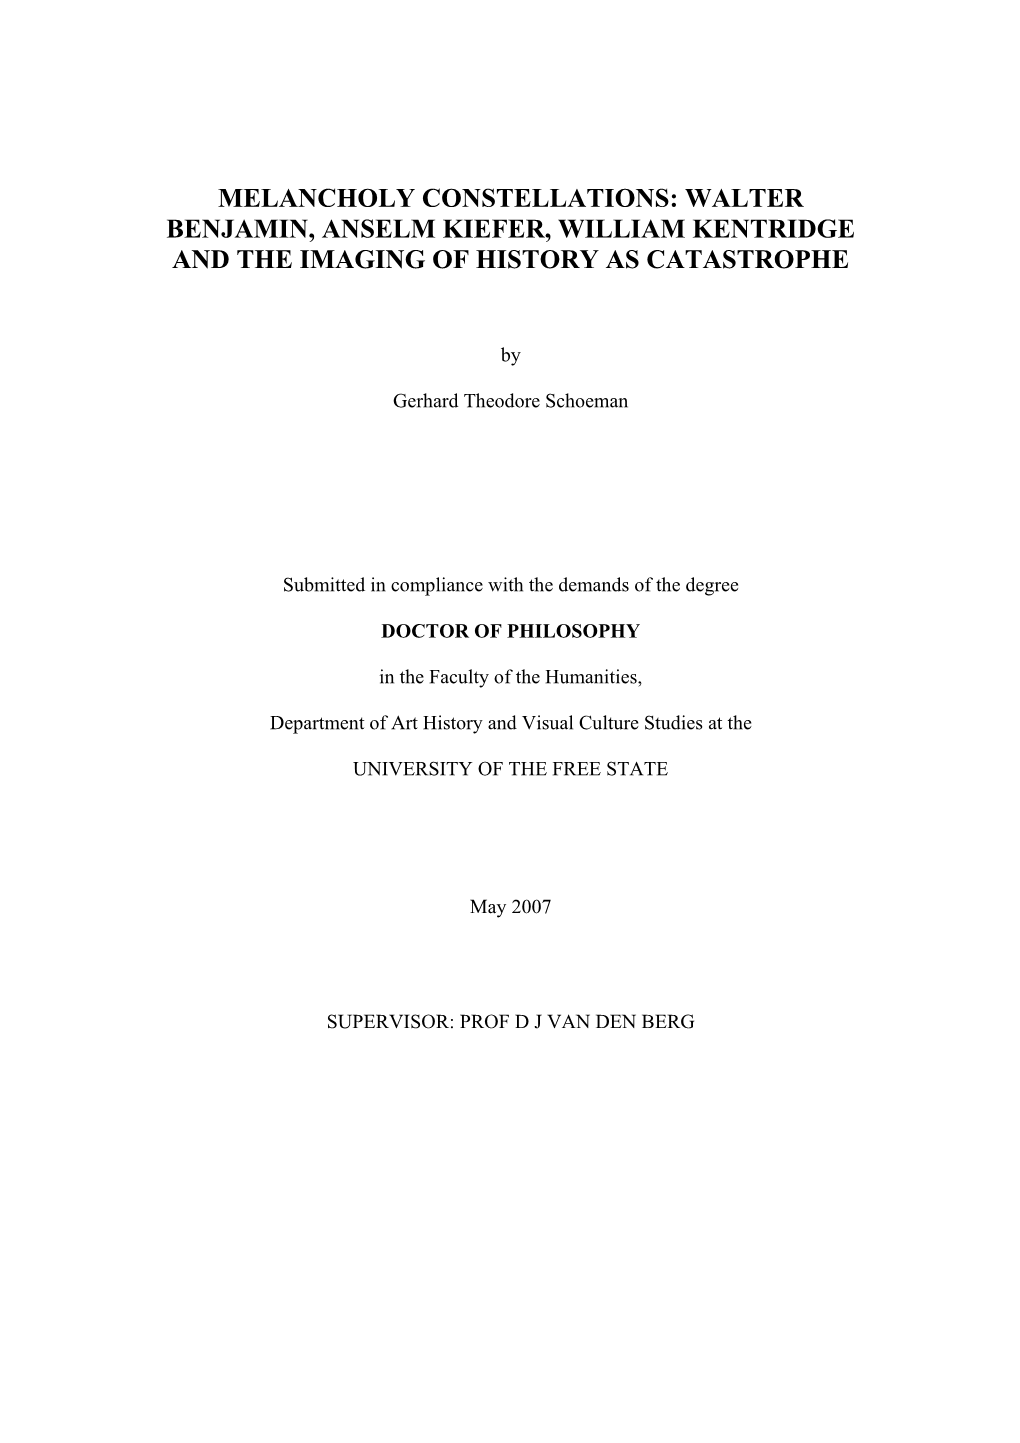 Walter Benjamin, Anselm Kiefer, William Kentridge and the Imaging of History As Catastrophe